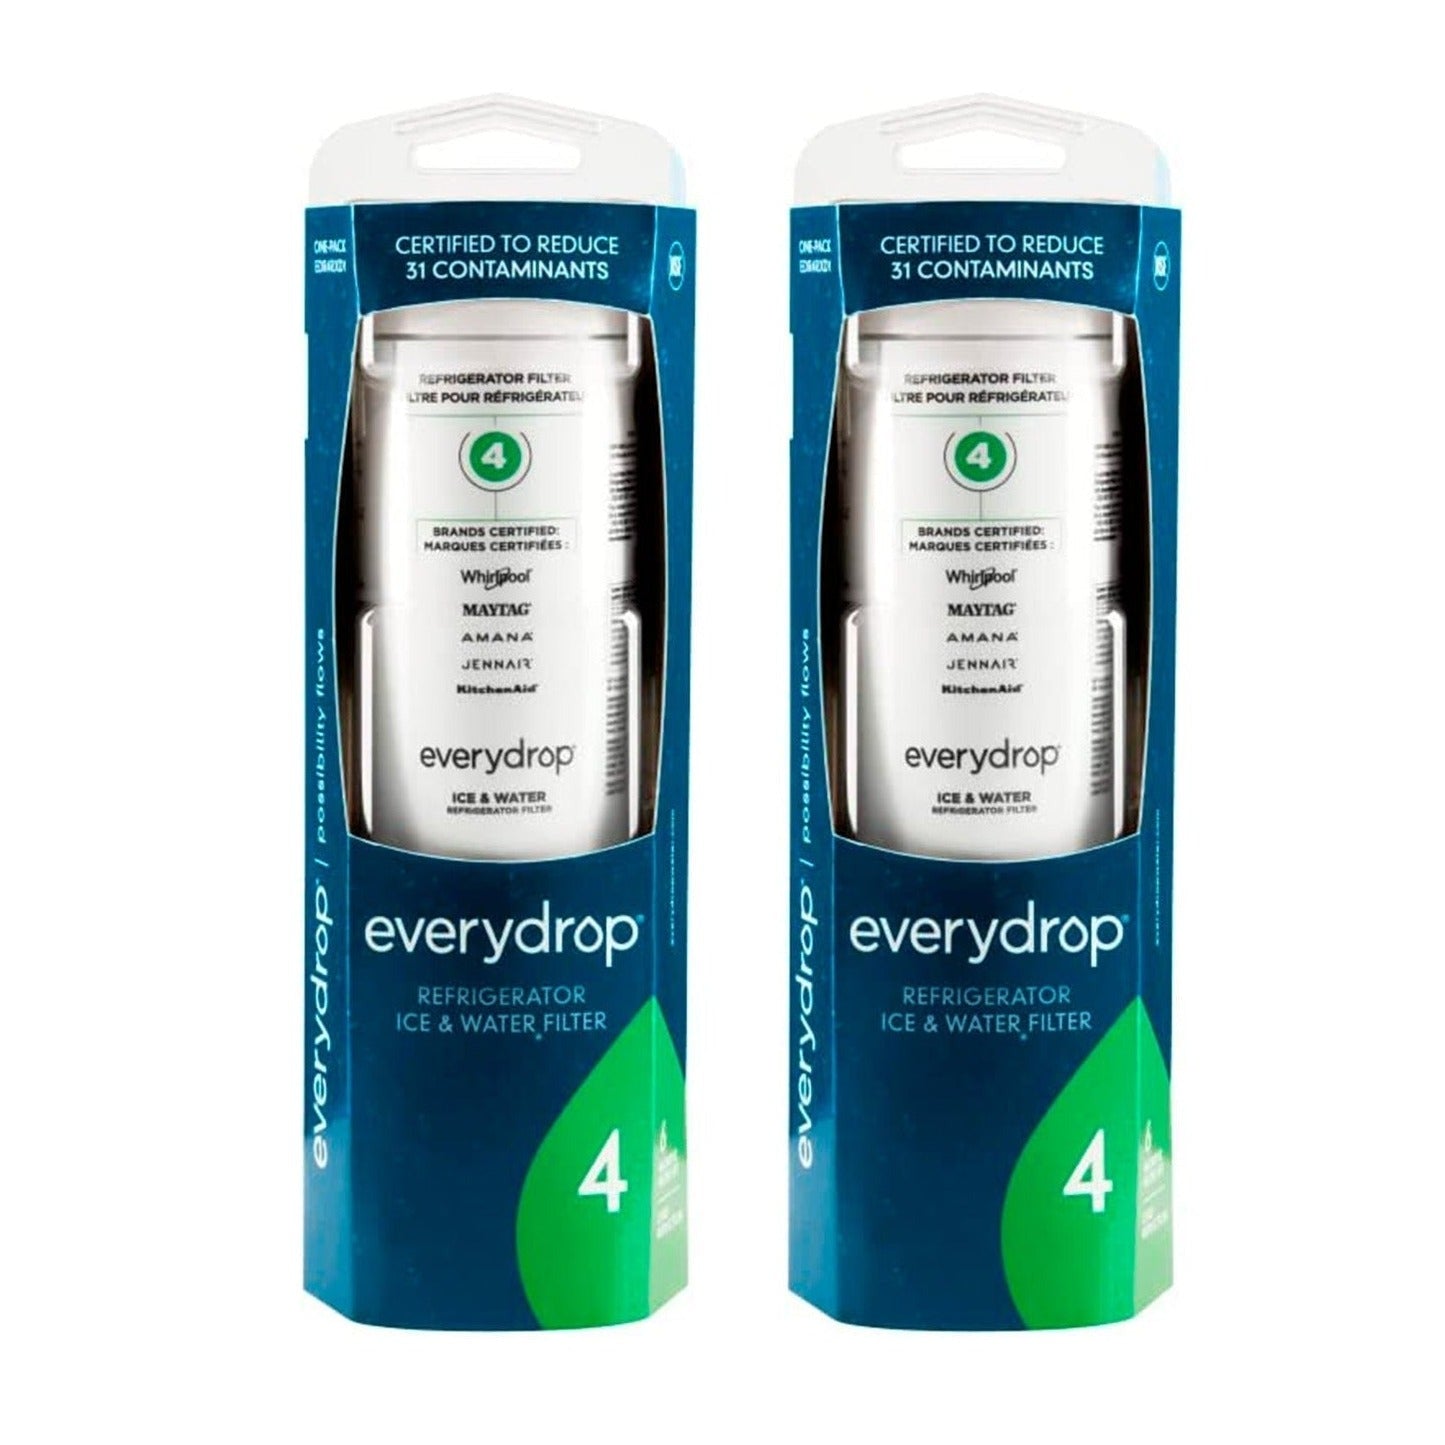 Everydrop Refrigerator Water Filter 4 - EDR4RXD1, 2 pack